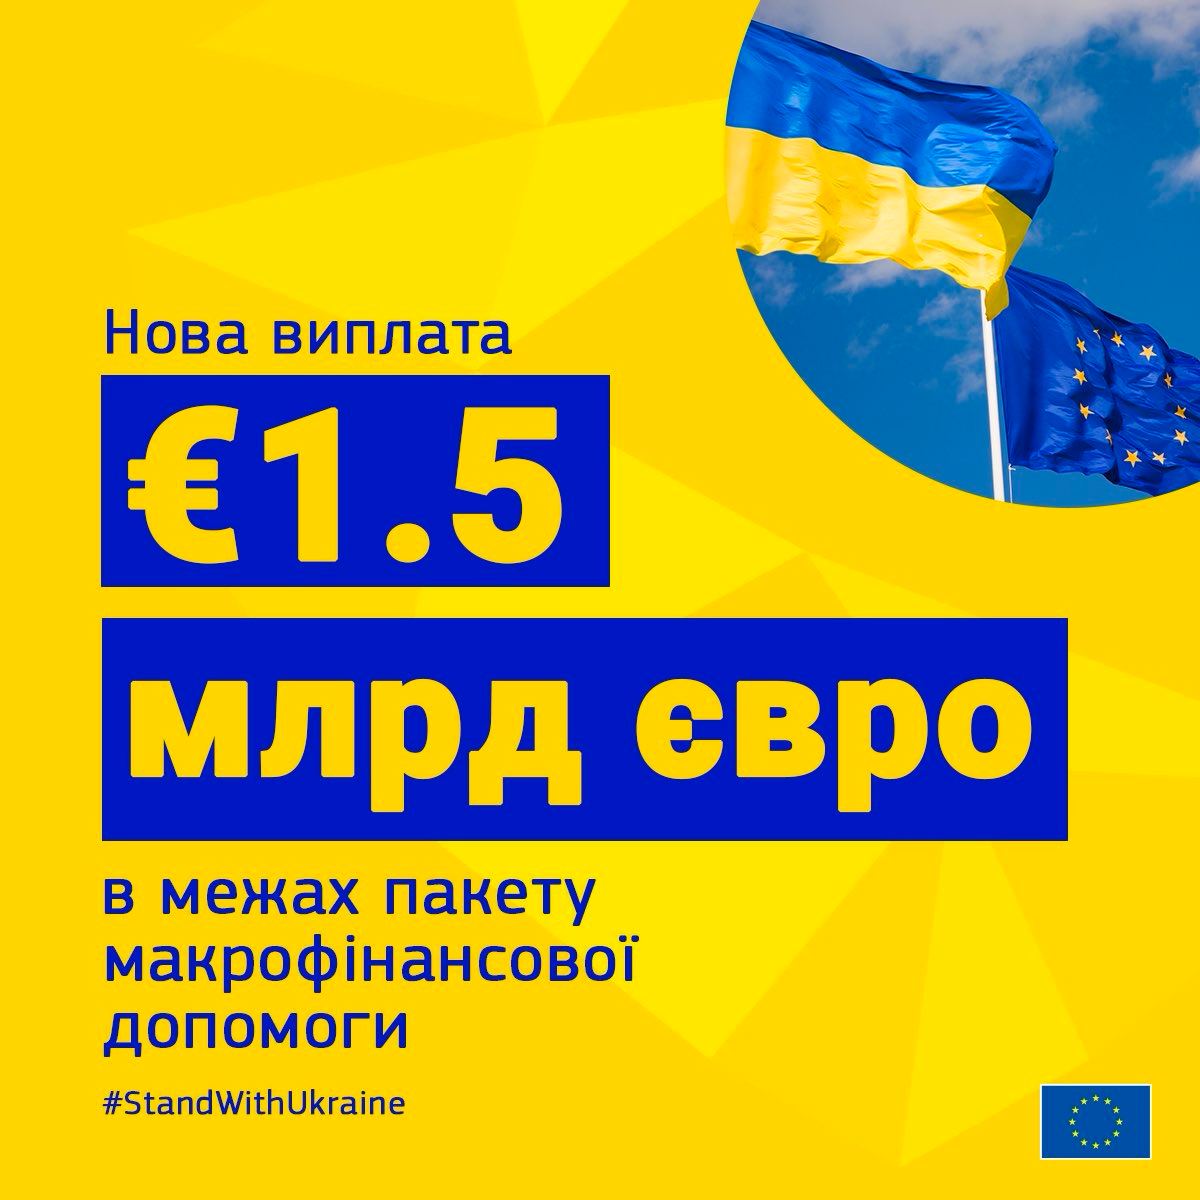 Украина получила 1,5 млрд евро из пакета макрофинансовой помощи ЕС на 18 млрд евро